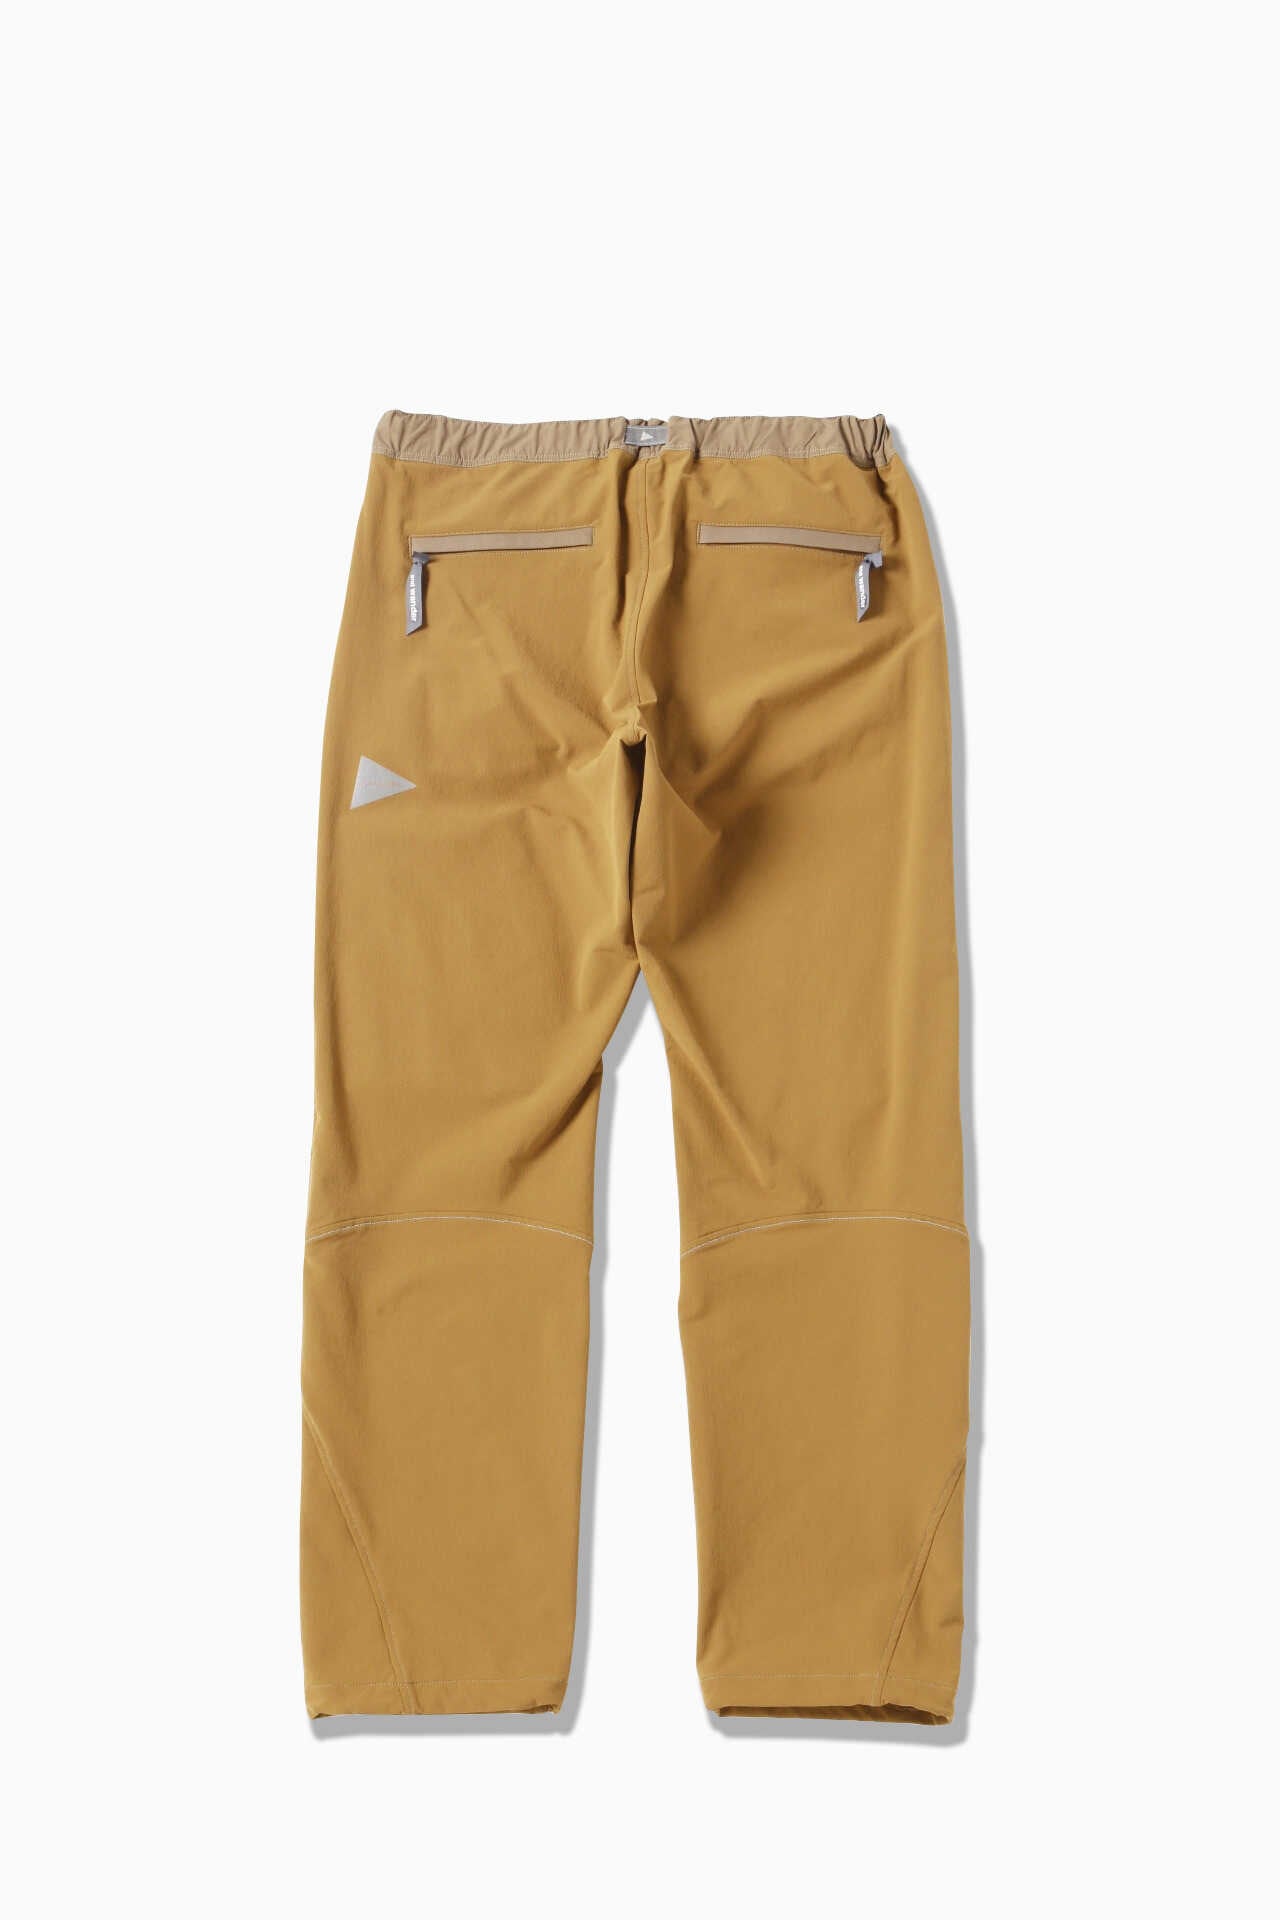 nylon double cloth pants